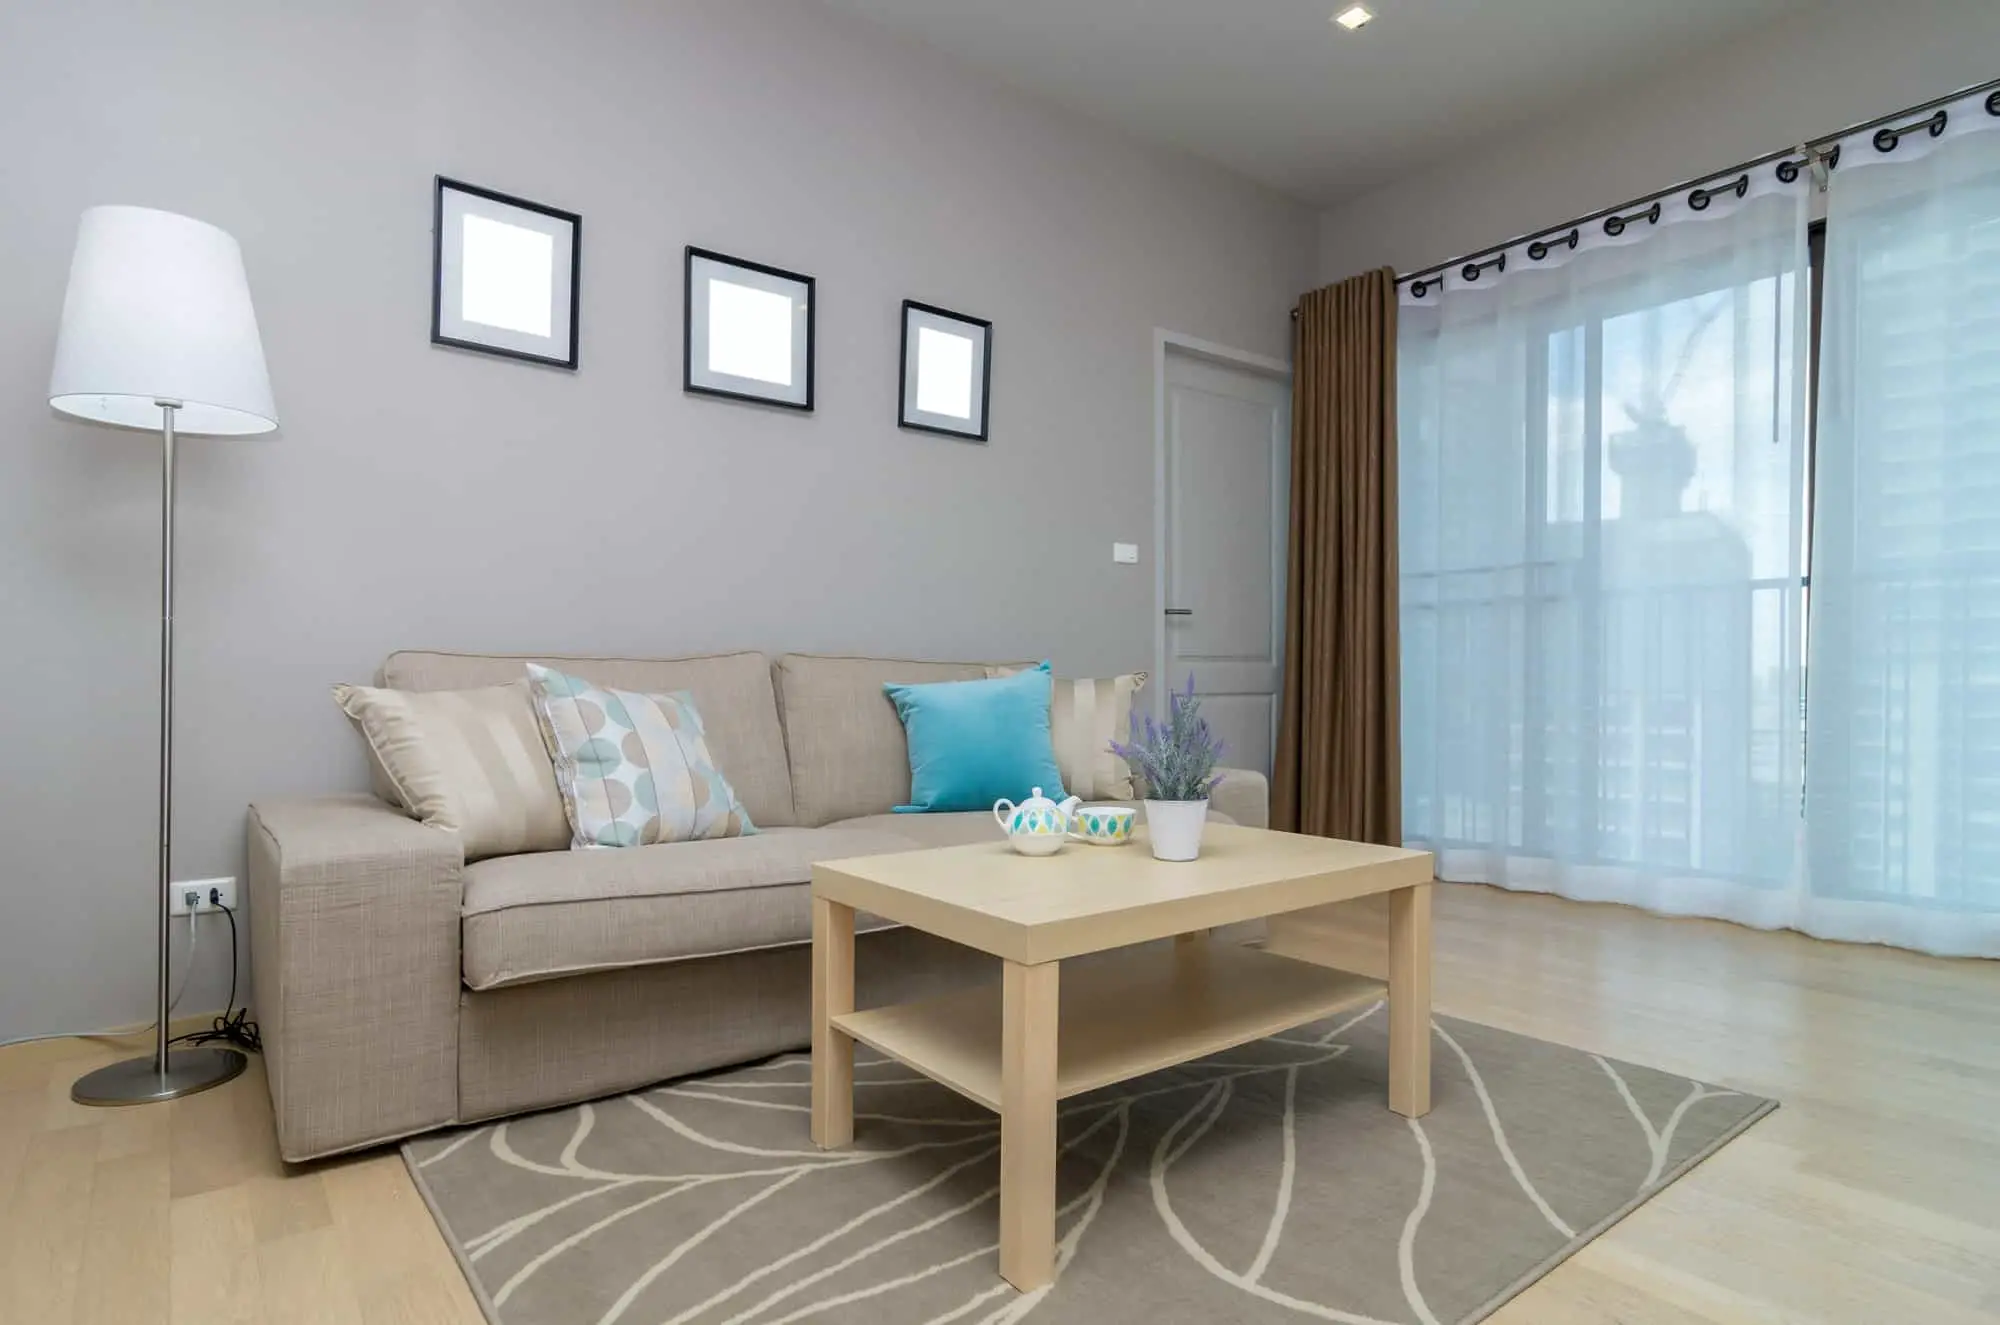 a simple living room design